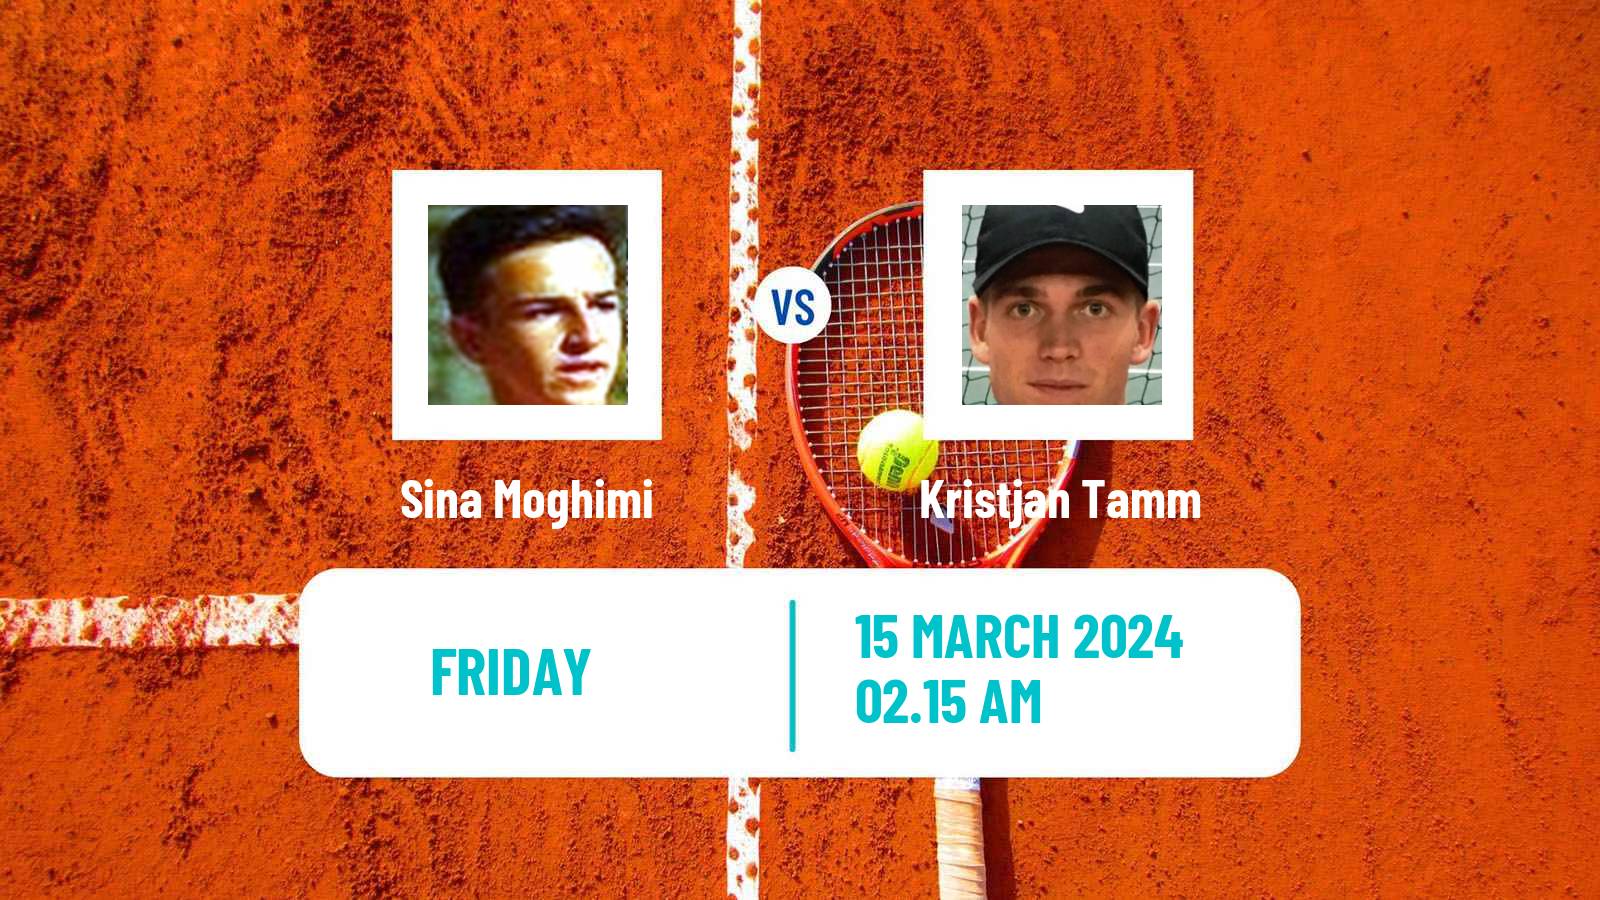 Tennis Davis Cup World Group II Sina Moghimi - Kristjan Tamm